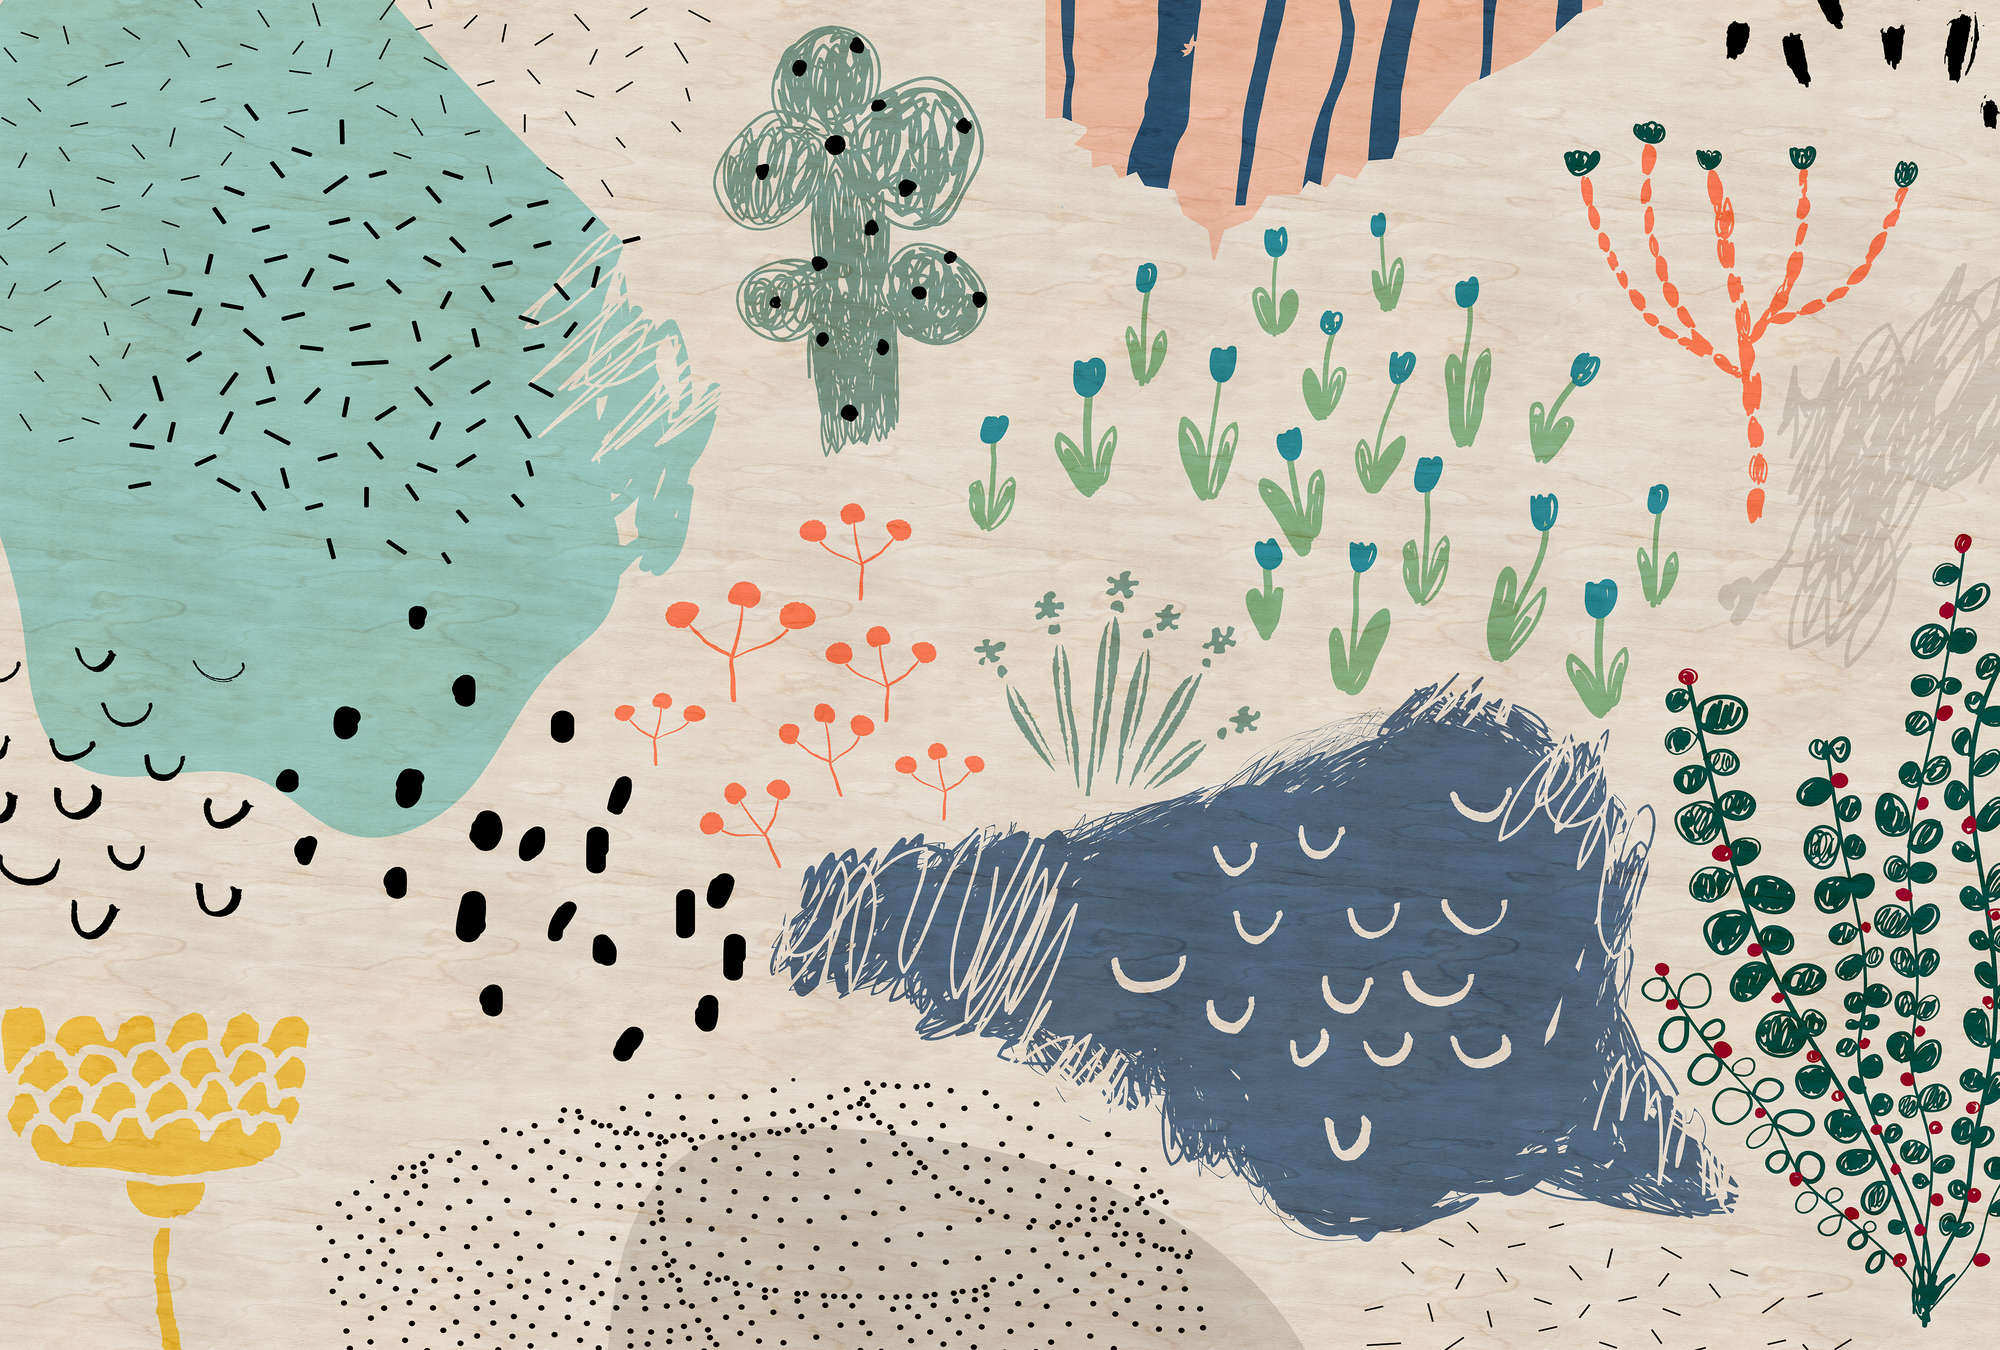             Crayon garden1 - Nursery wallpaper, Doodle motif in plywood structure - Beige, Blue | mother-of-pearl smooth fleece
        